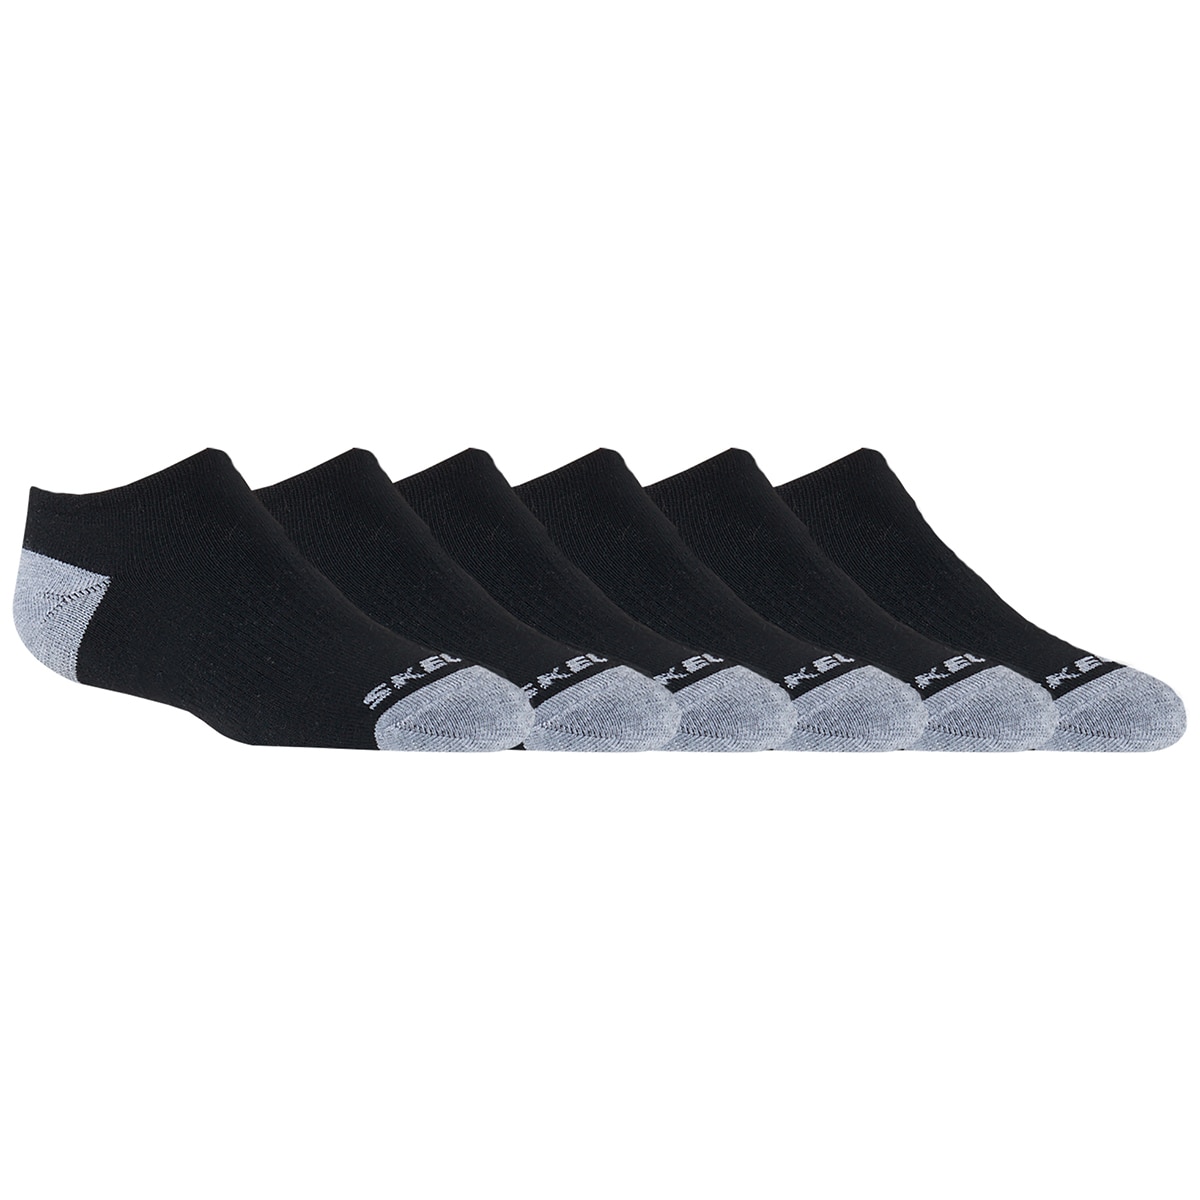 Skechers Boys' No Show Socks 6pk Black & Grey